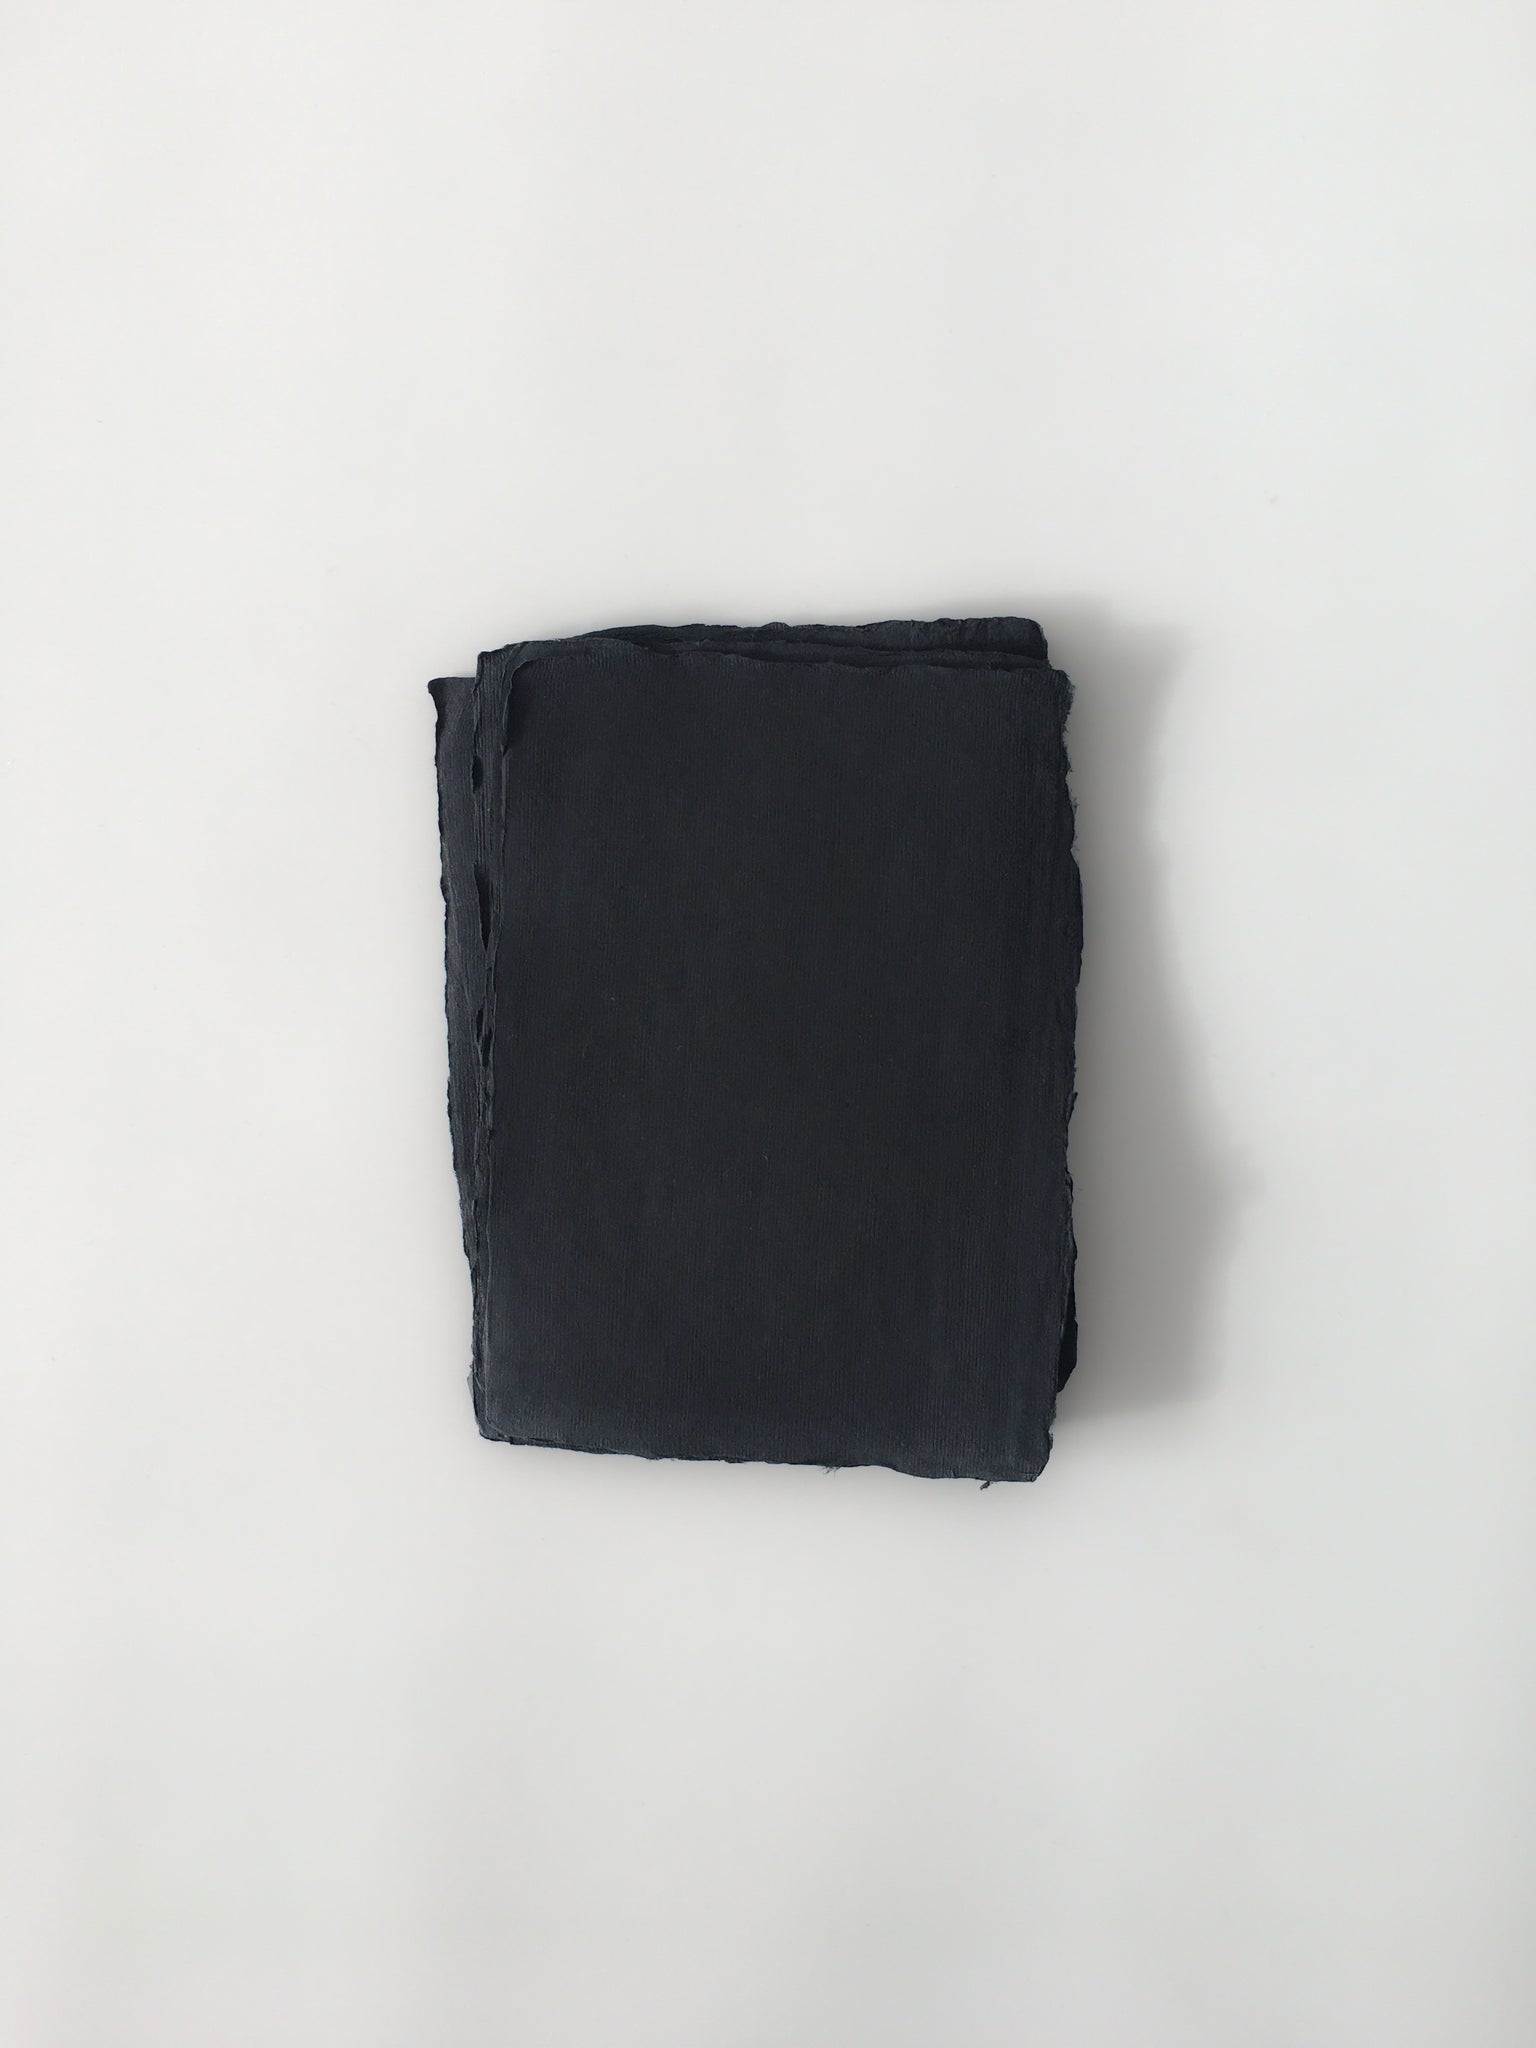 Handmade Deckle Edge Indian Cotton Paper Pack - Black